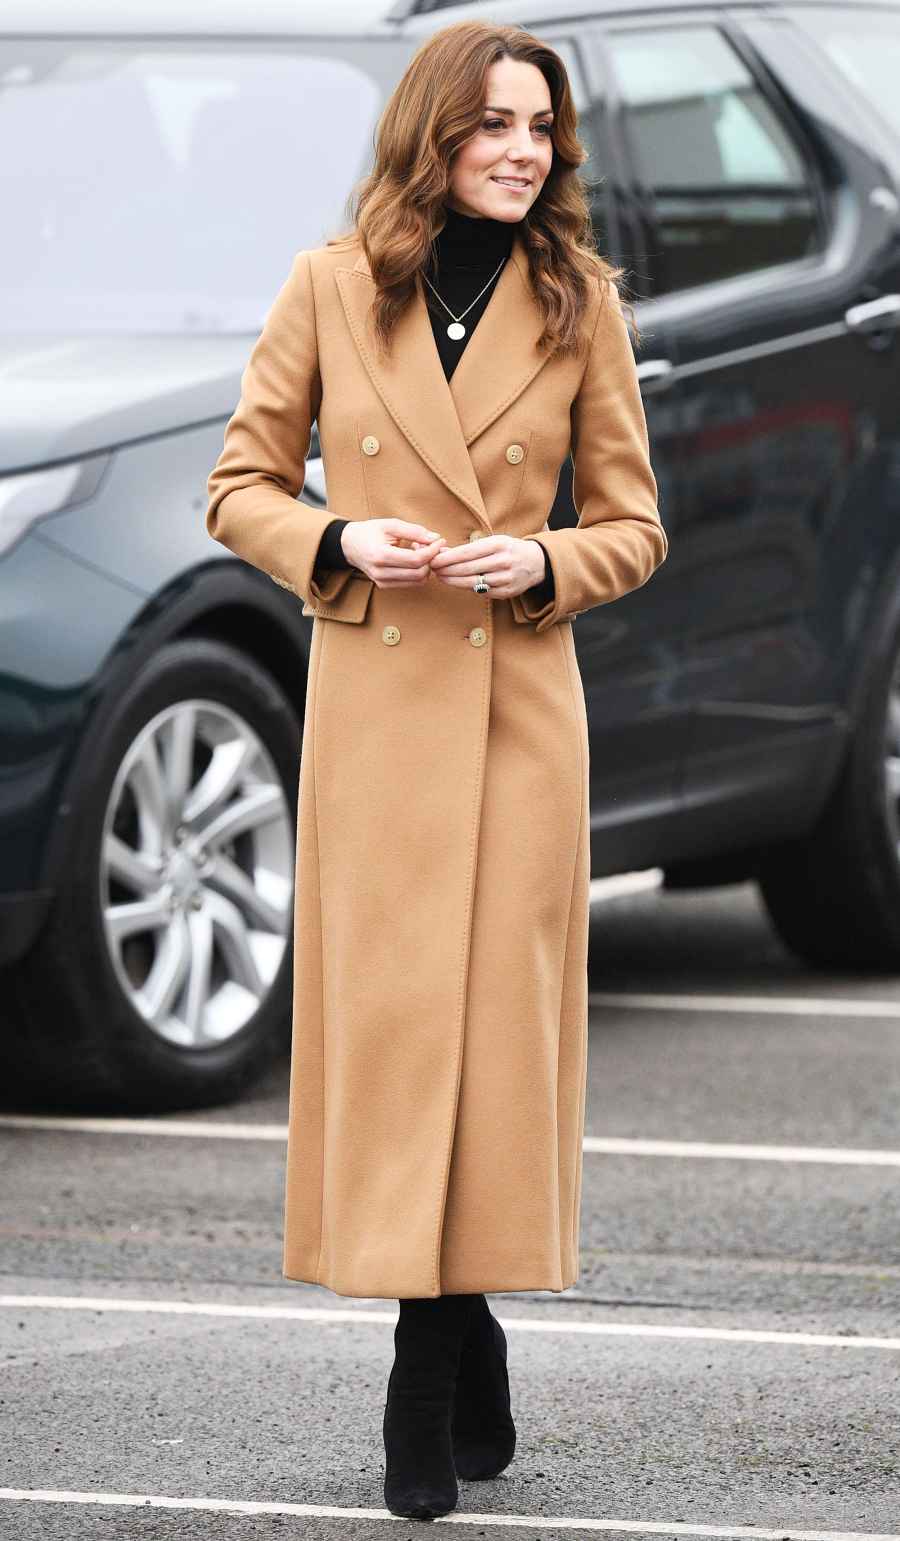 Duchess Kate Middleton Camel Coat January 22, 2020